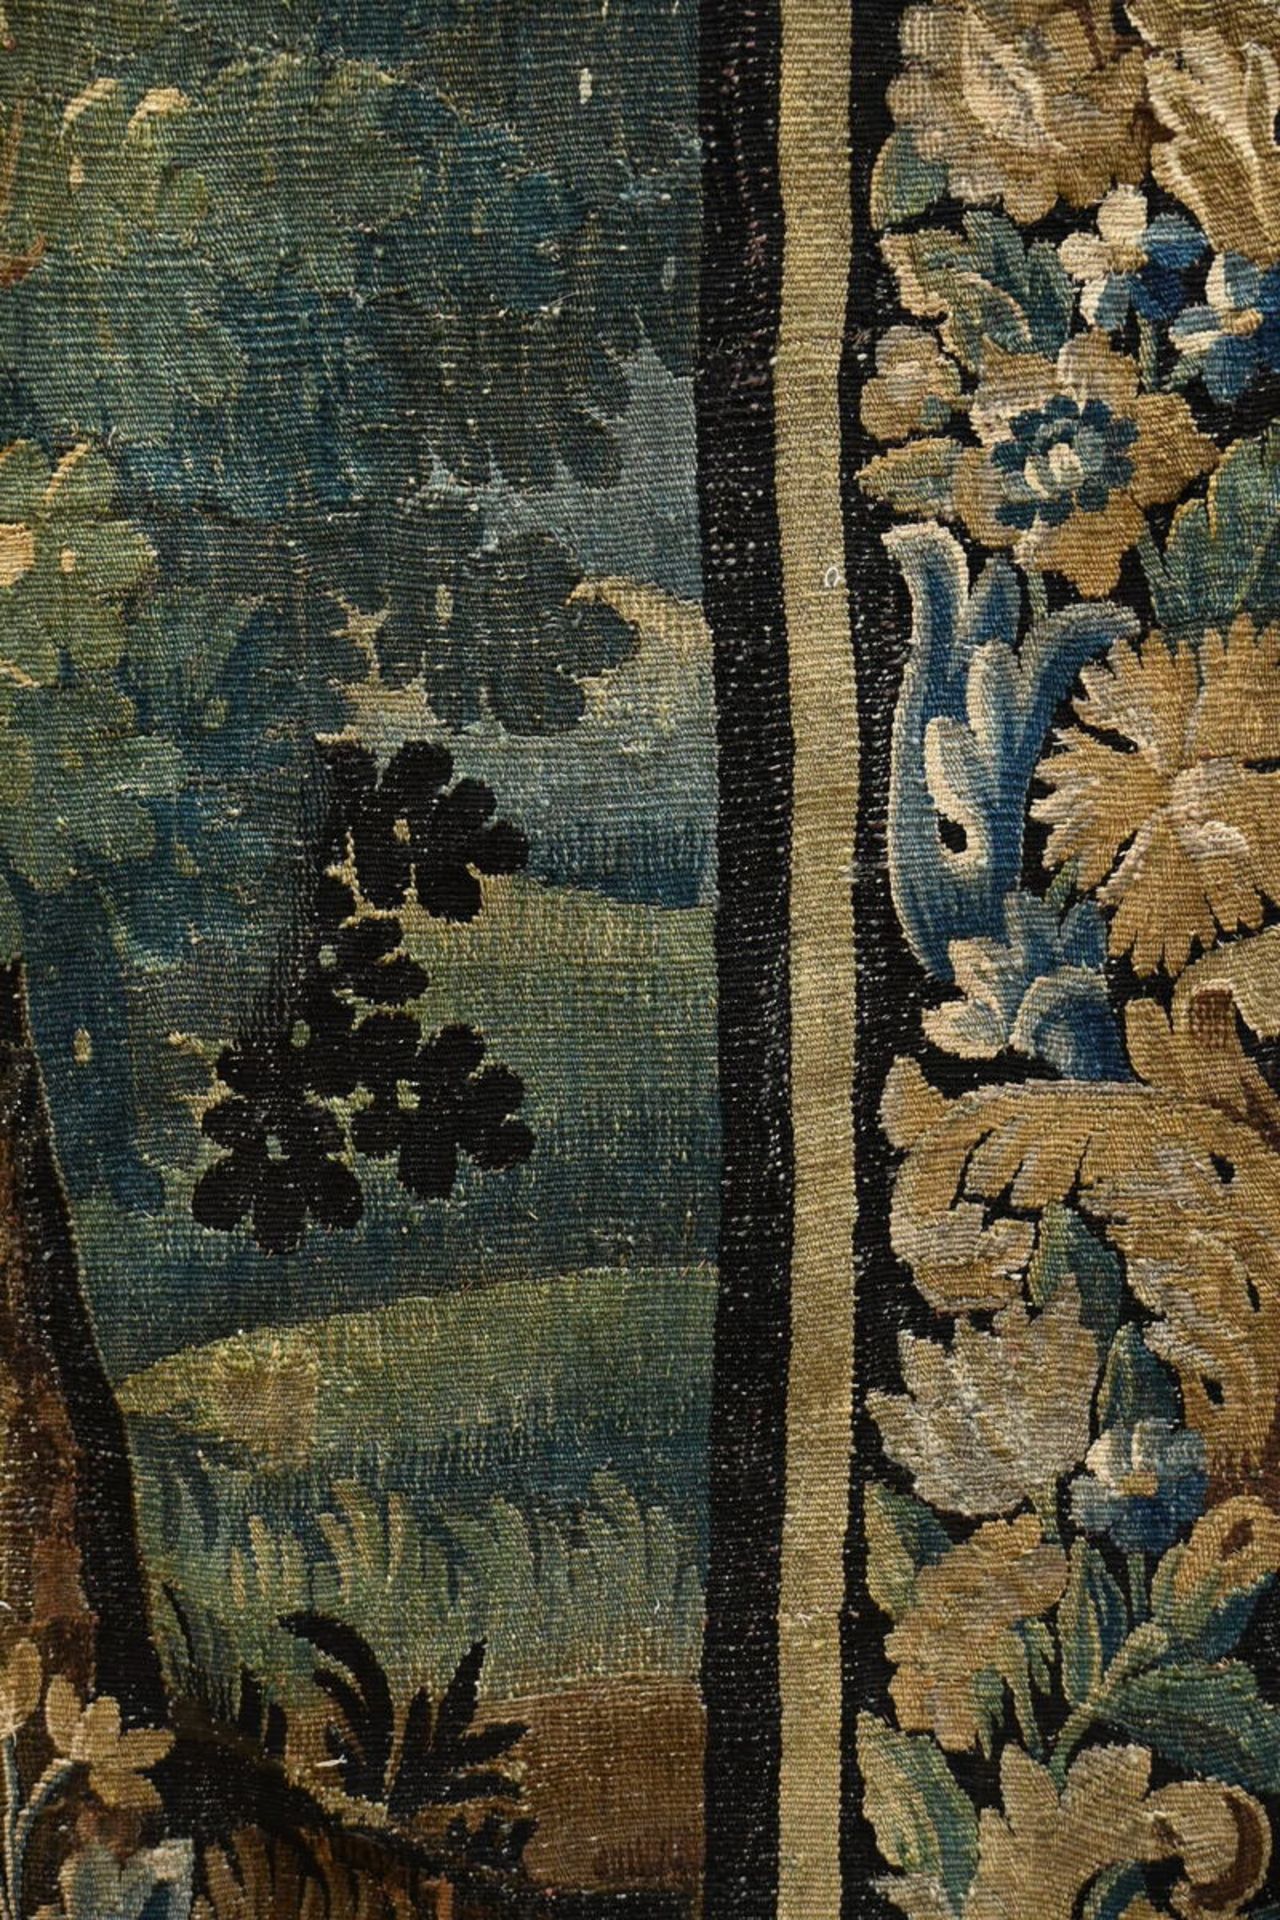 Tapestry 'greenery with birds', Oudenaarde 17th century (238x217cm) - Bild 4 aus 6